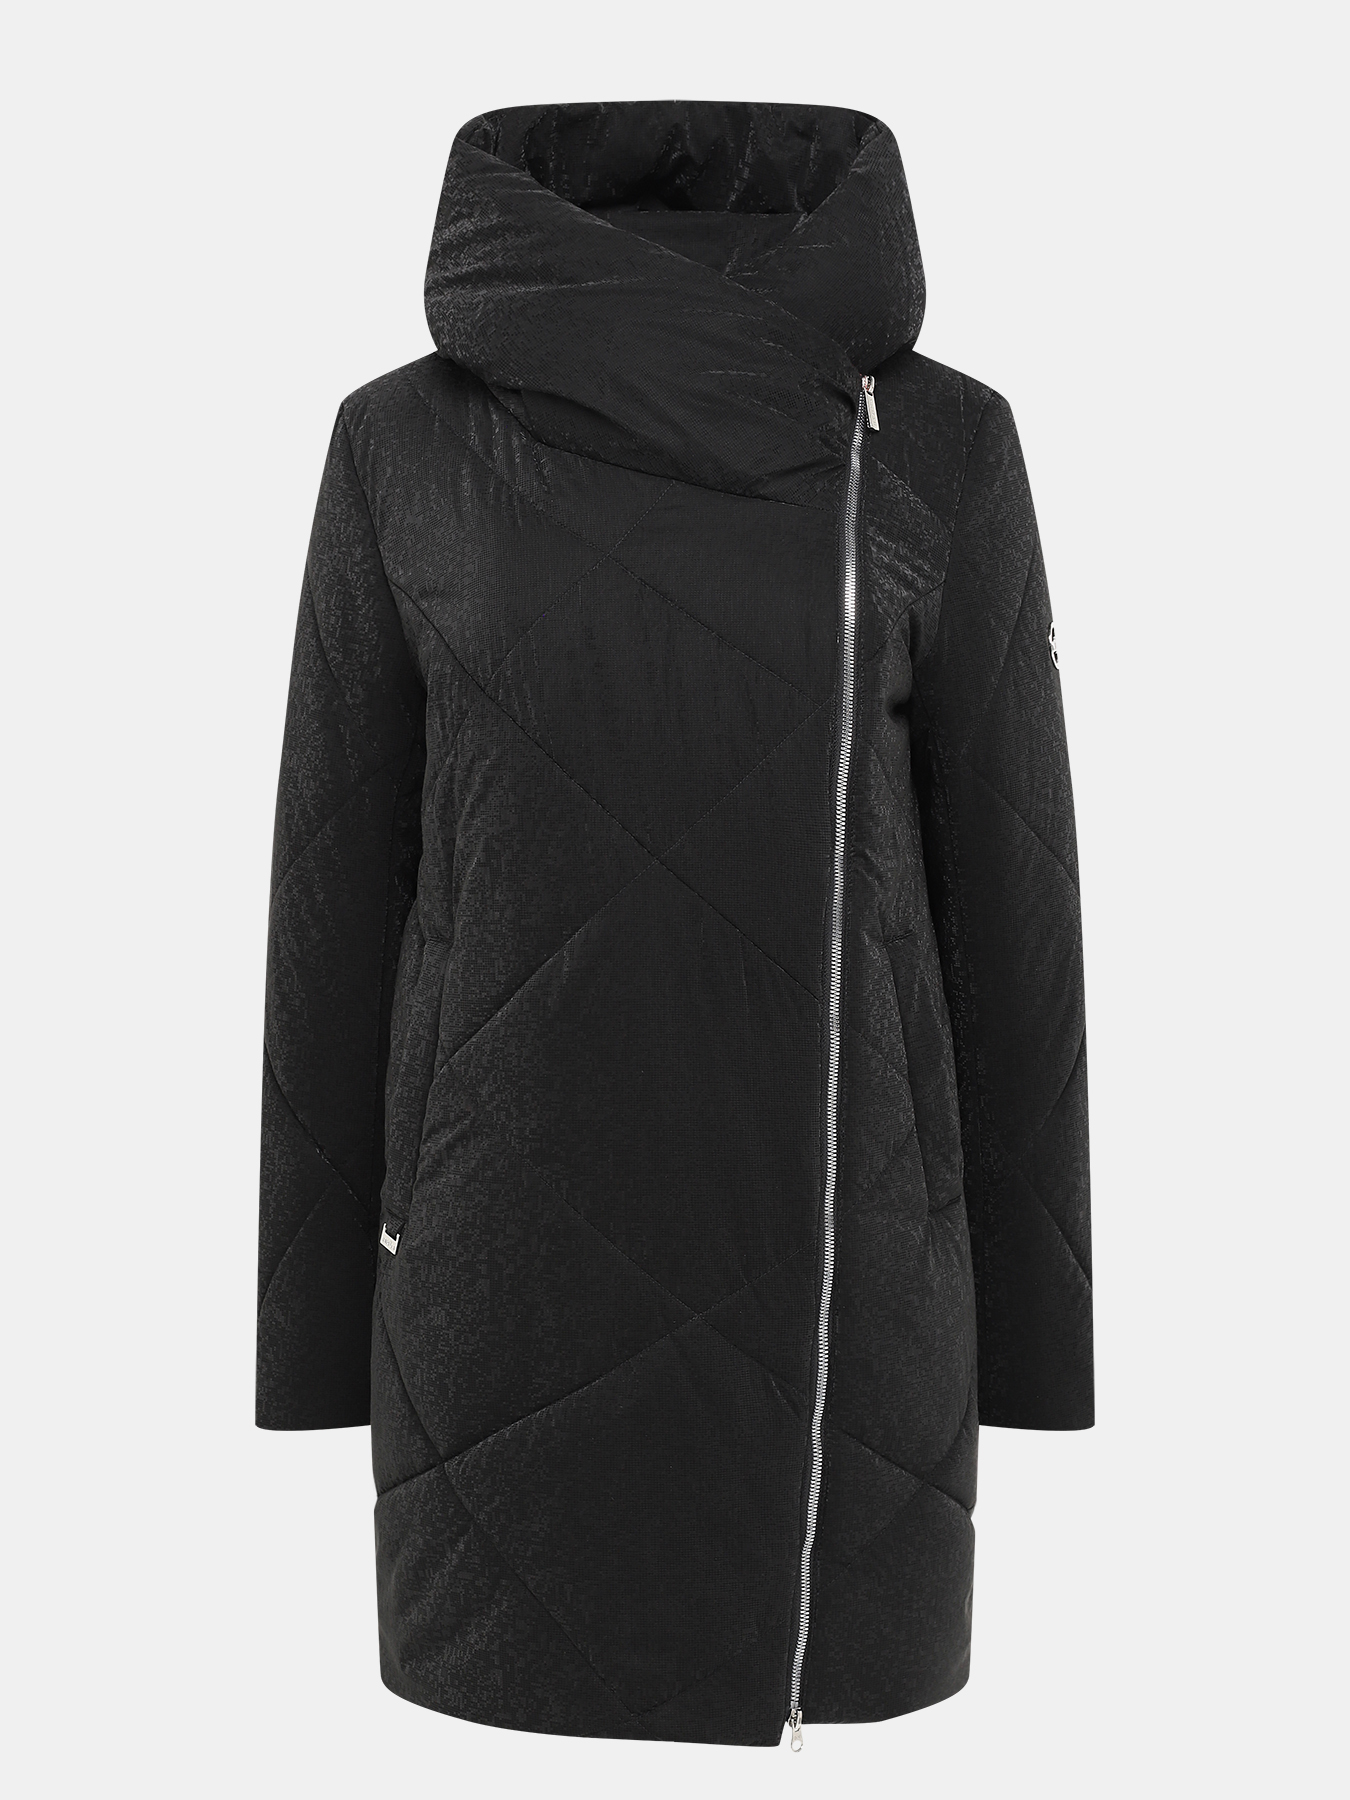 Пальто зимнее Maritta 433524-024, цвет черный, размер 52